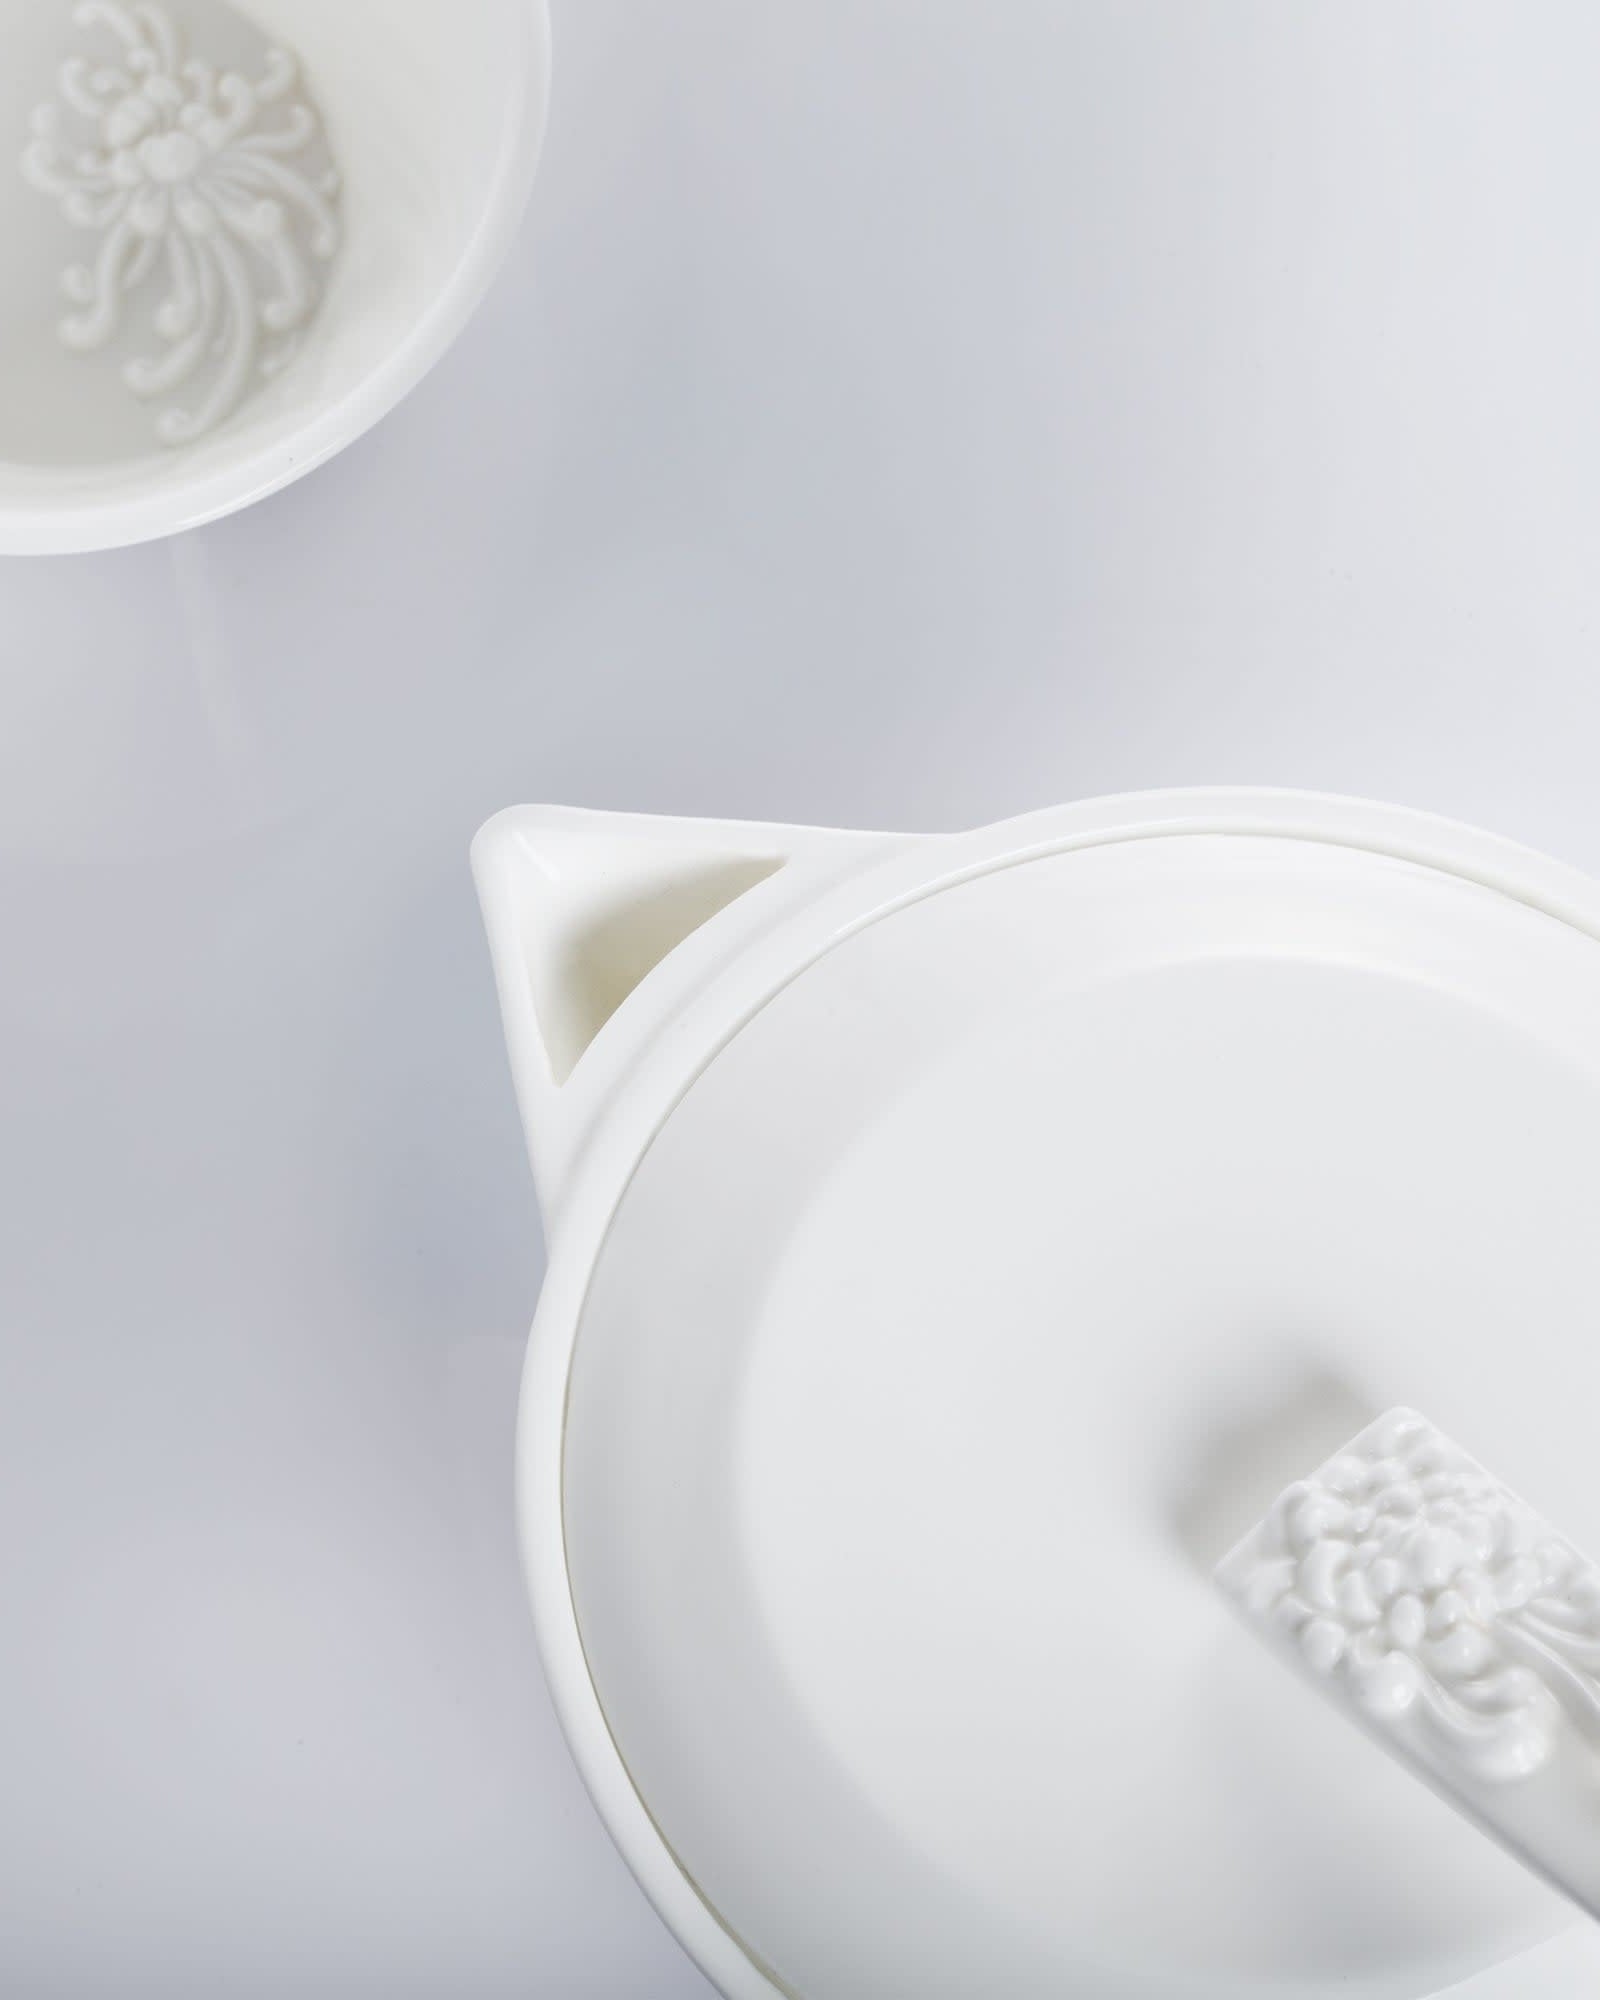 LIULI Crystal Art Tea Set, Bone China, "Plump Little Bird"